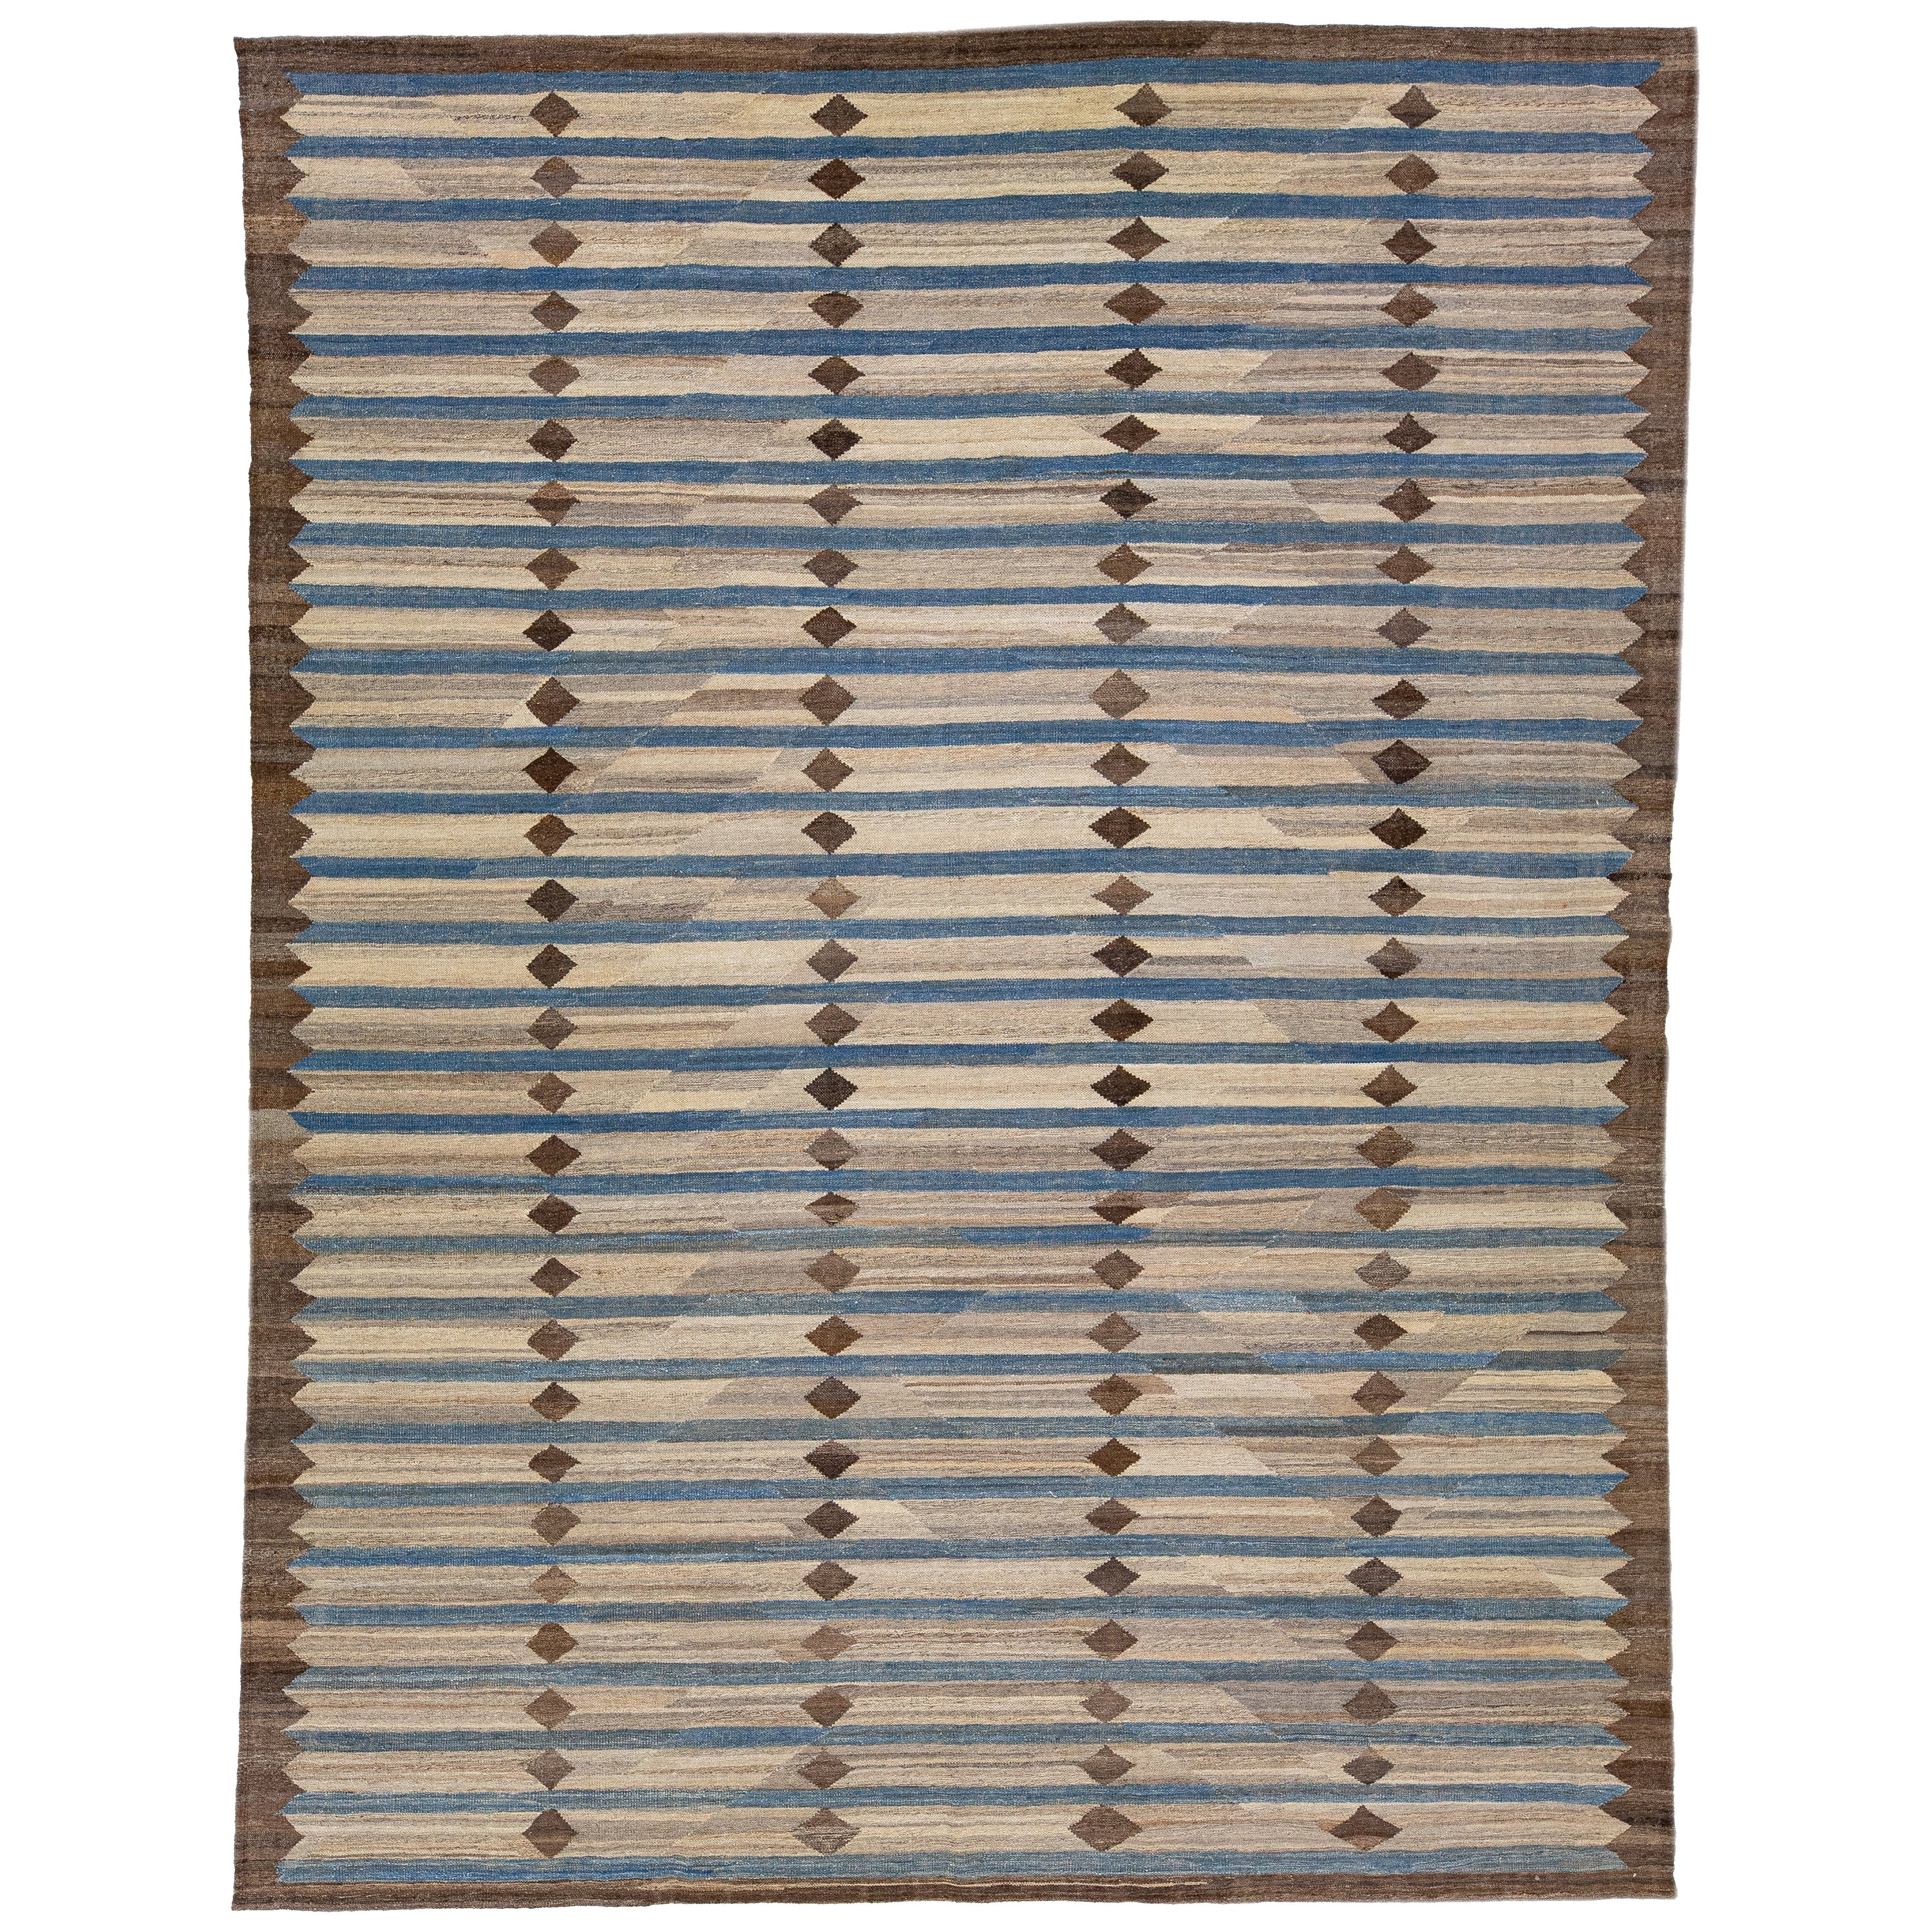 Deco Comteporary Kilim Wool Rug With Brown & Blue Geometric Design